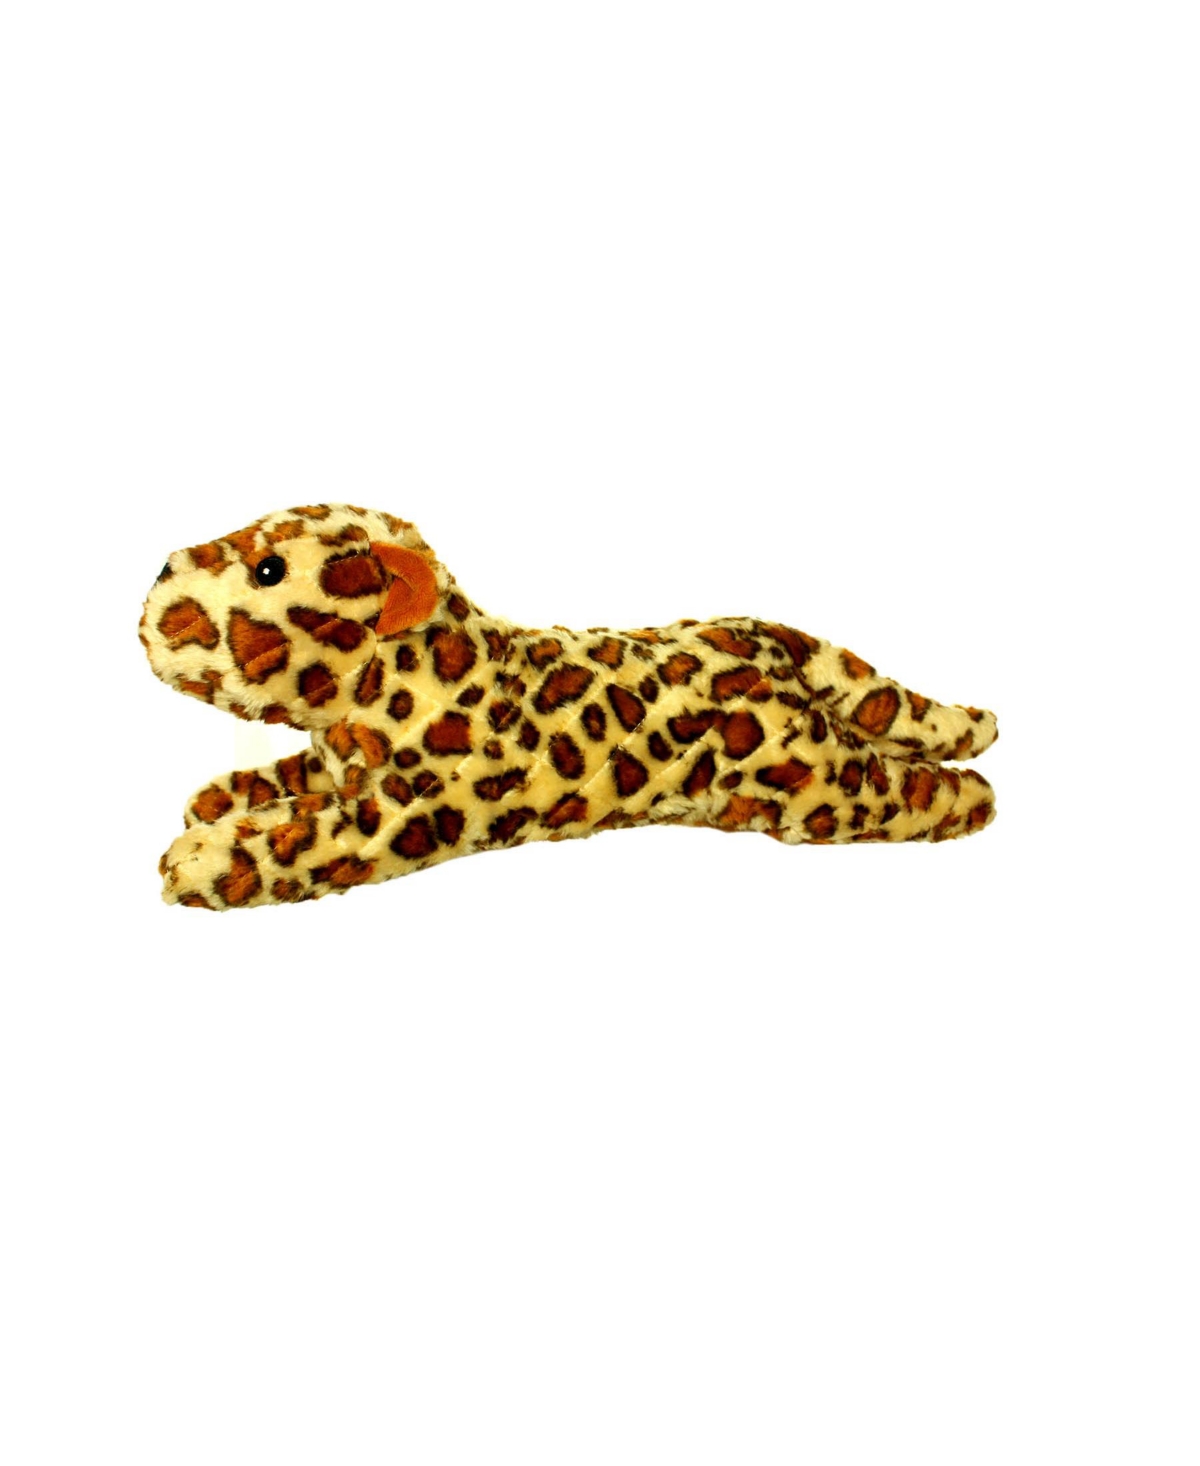 Massive Safari Leopard, Dog Toy - Brown